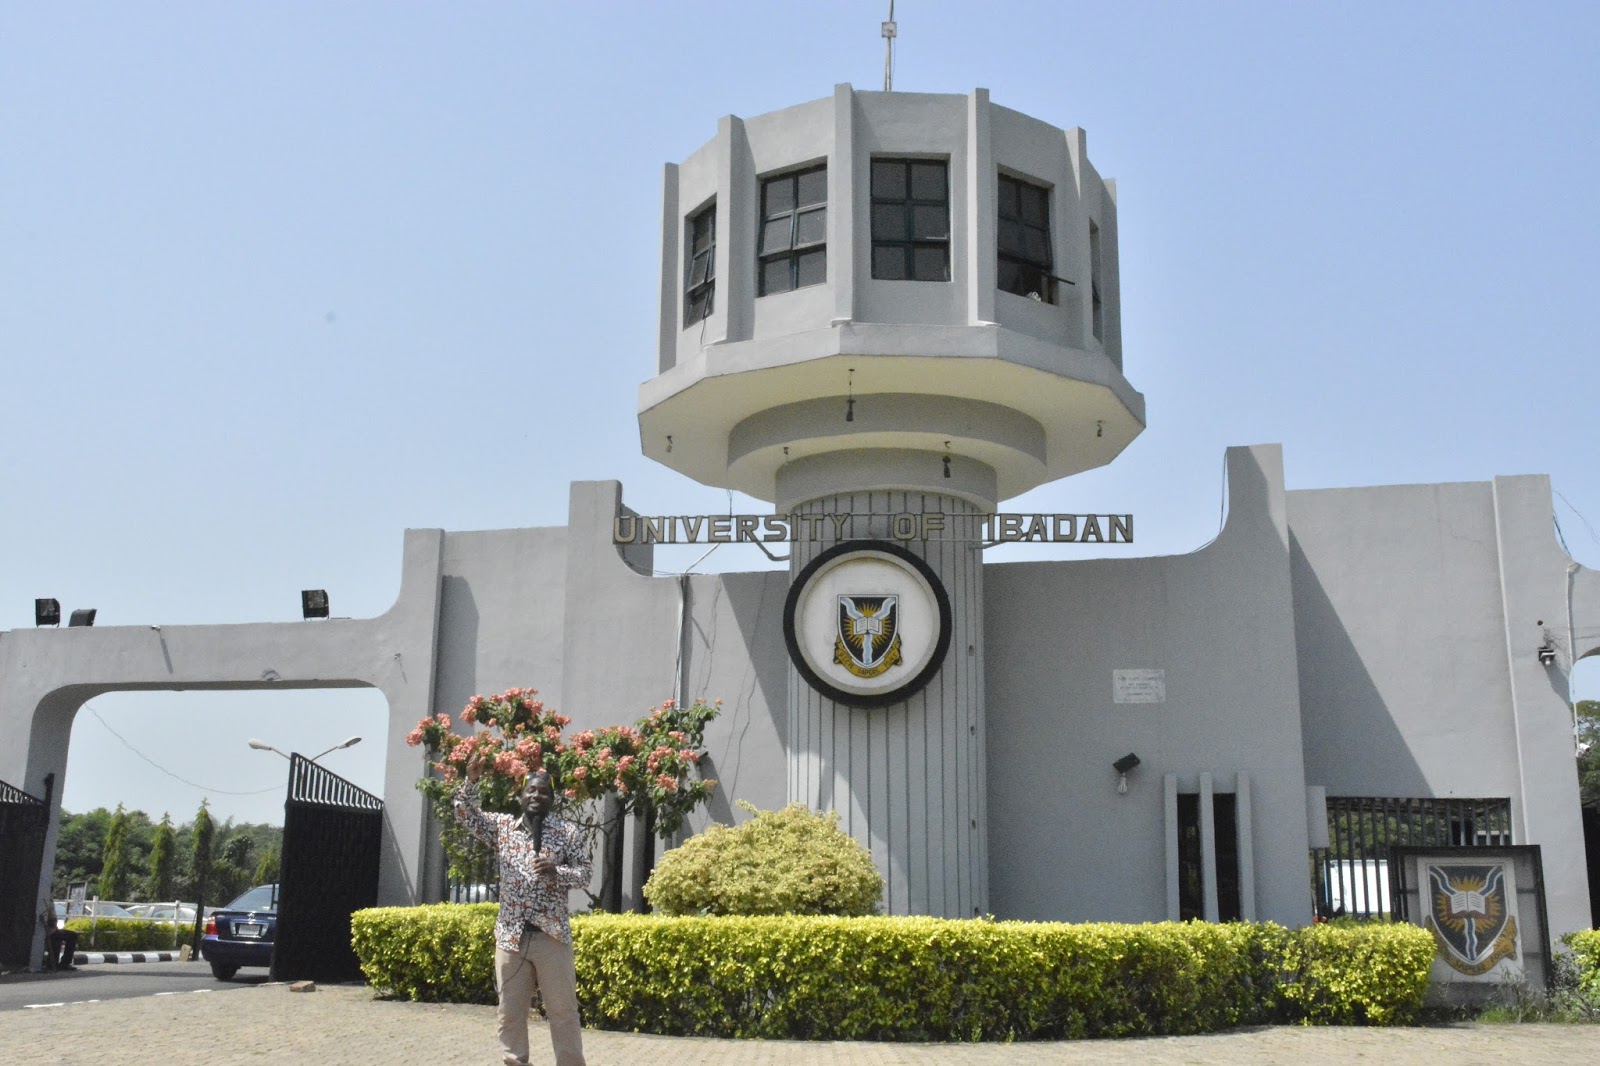 Times Higher Education ranks UI best, LASU second in Nigeria